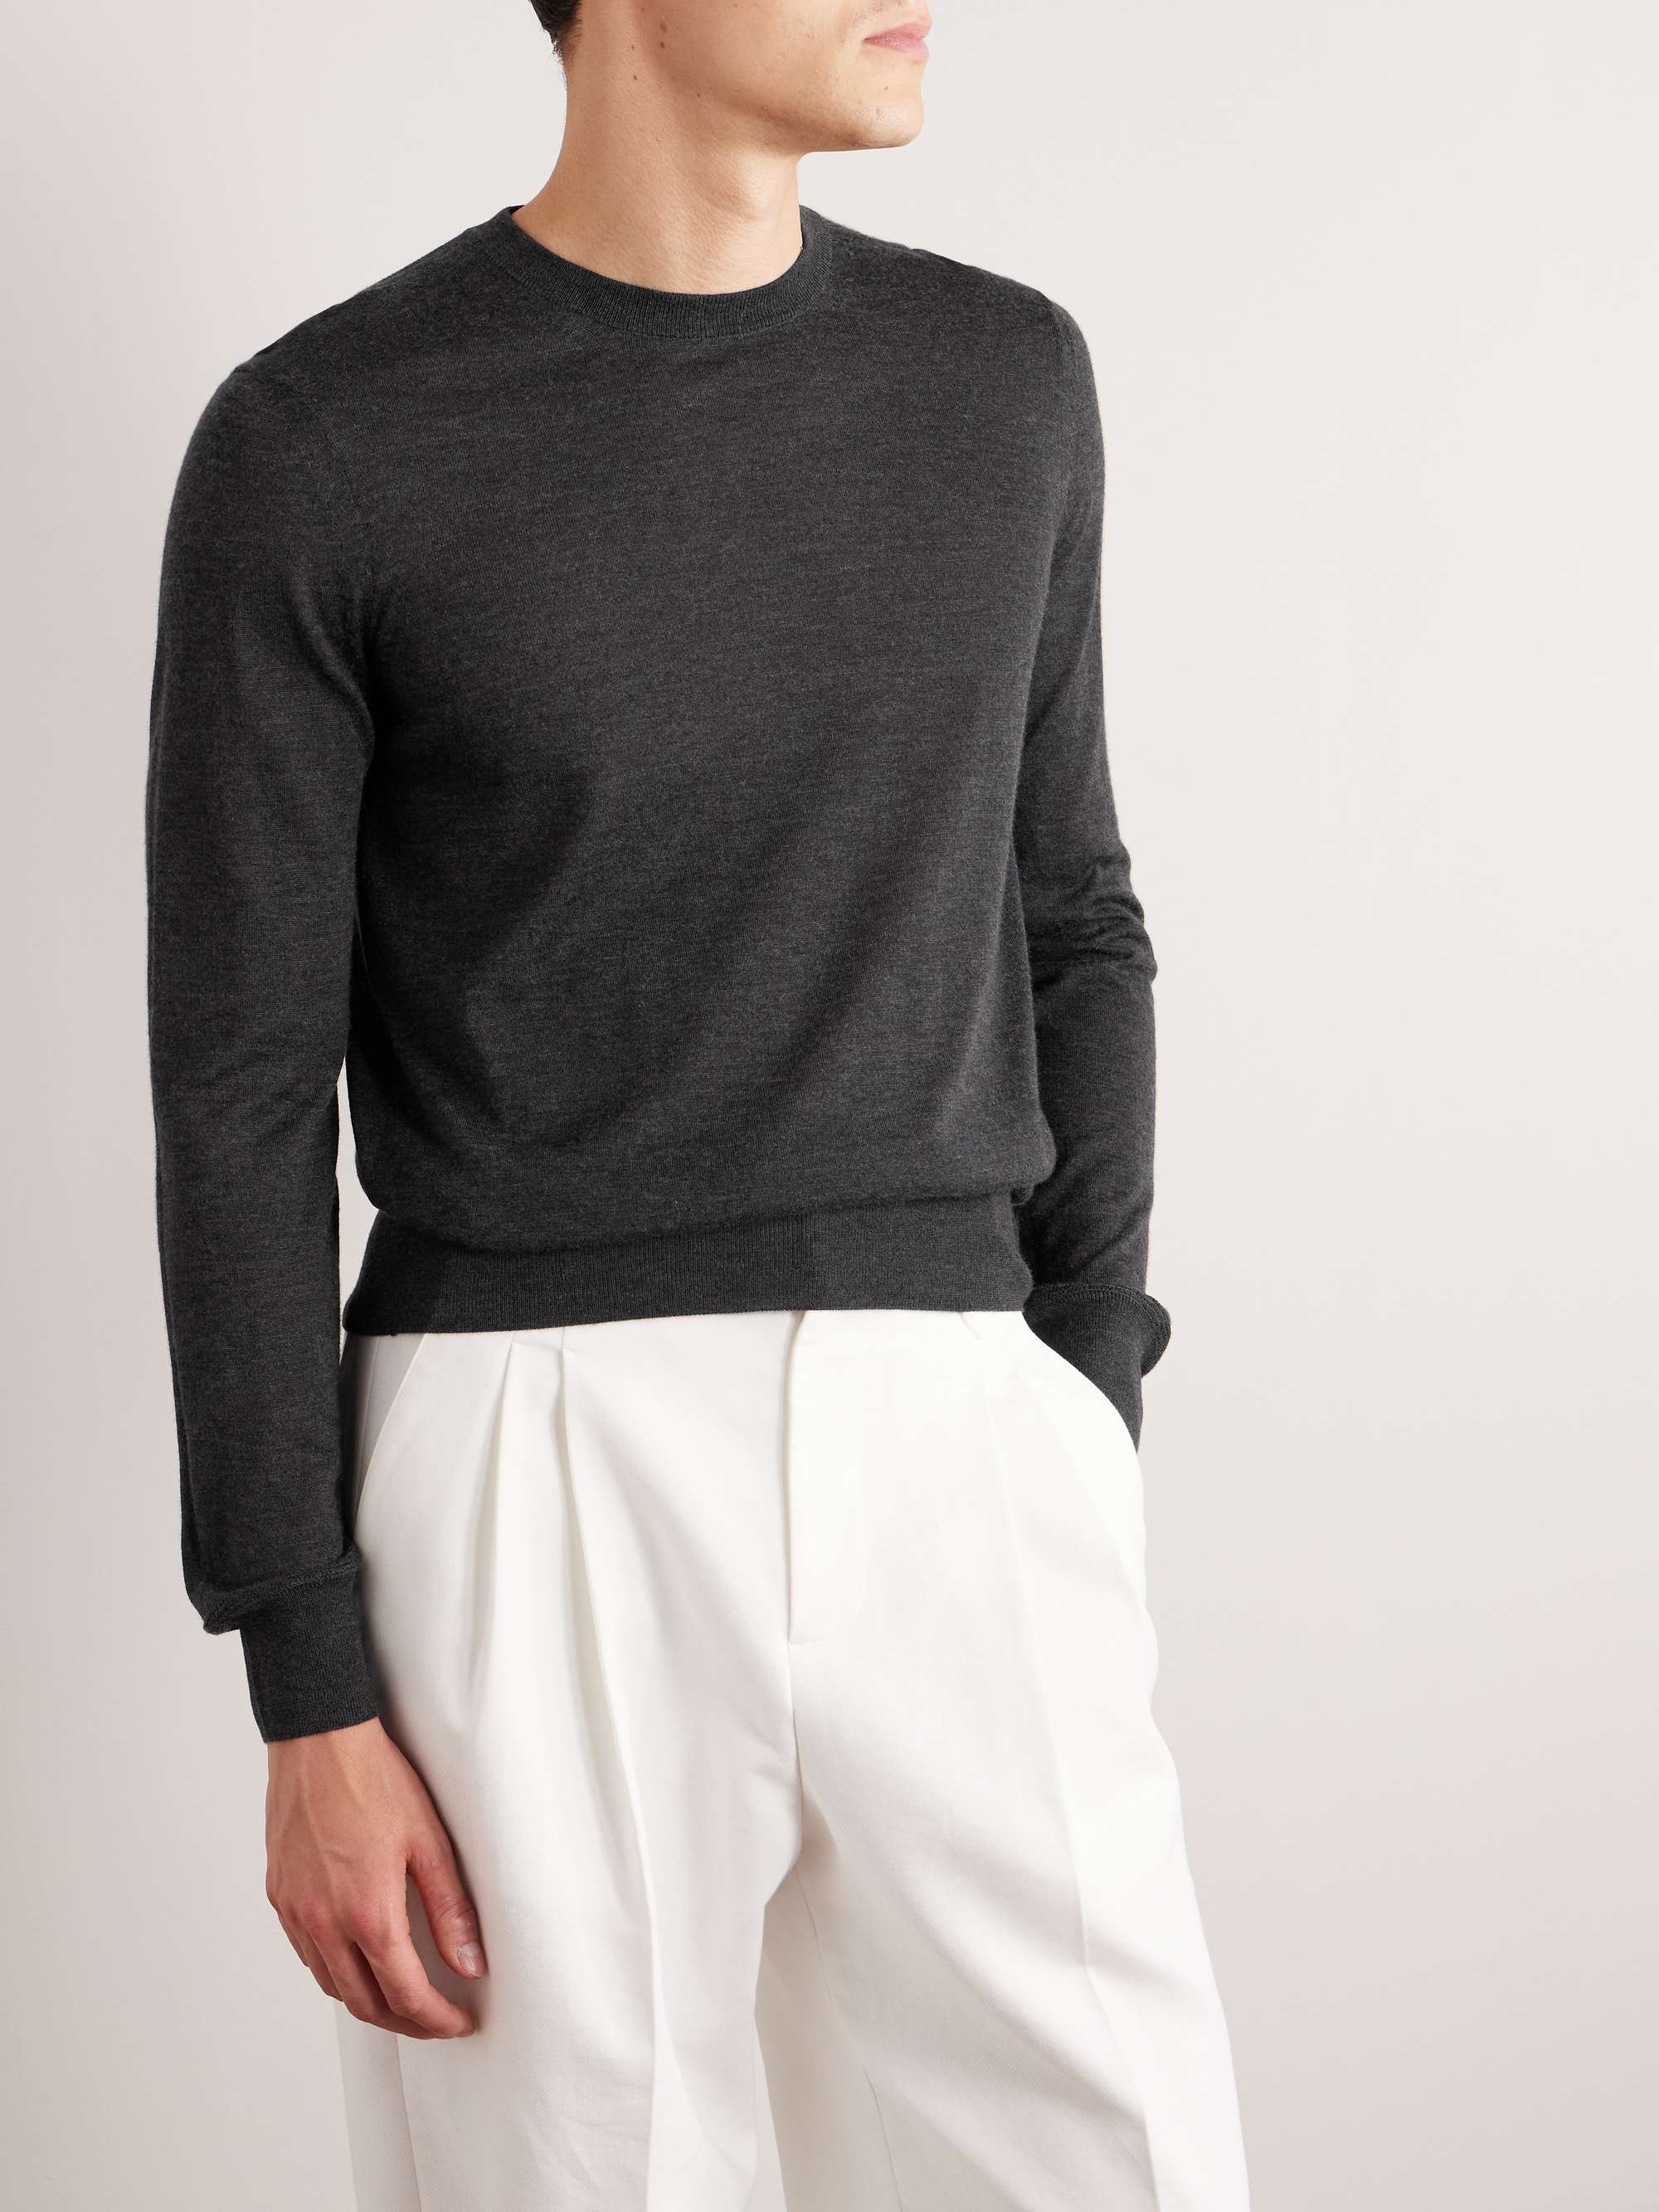 TOM FORD Slim-Fit Cashmere and SIlk-Blend Sweater for Men | MR PORTER